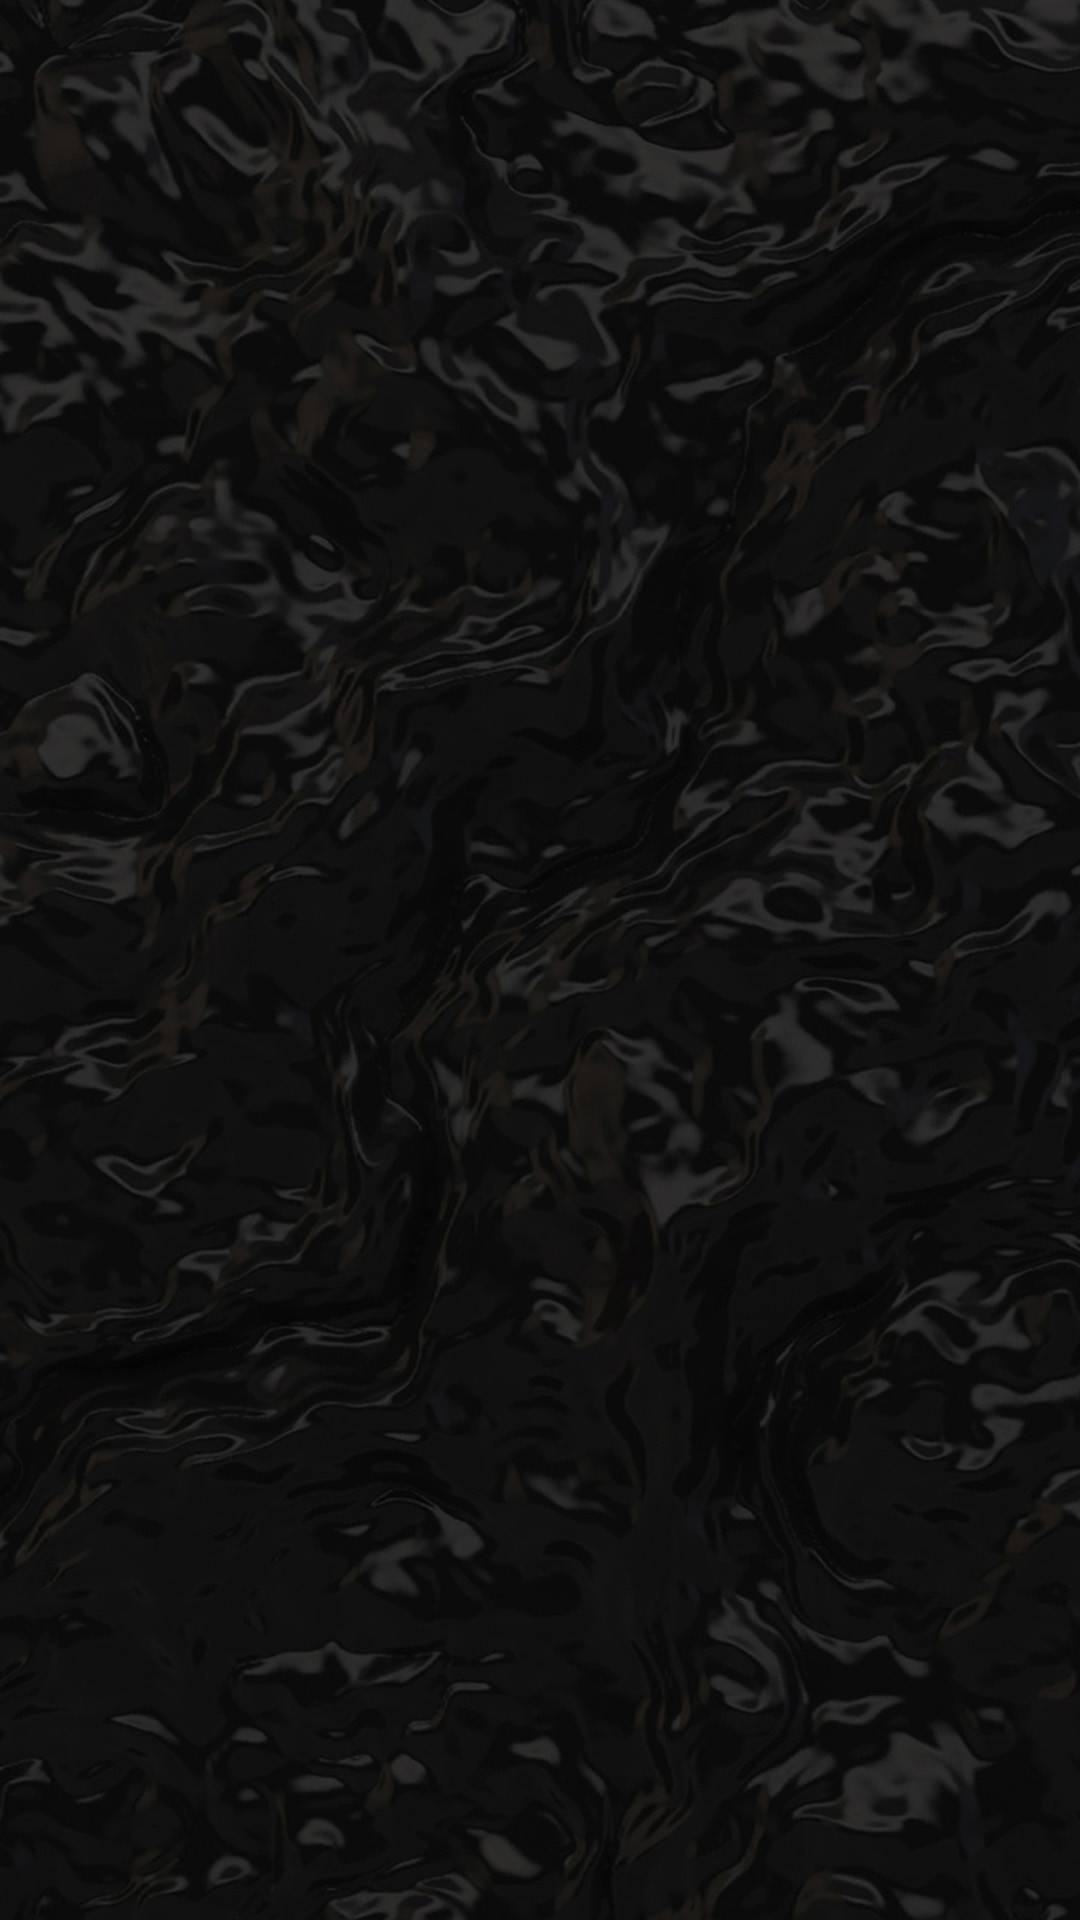 galaxy s5 wallpaper black